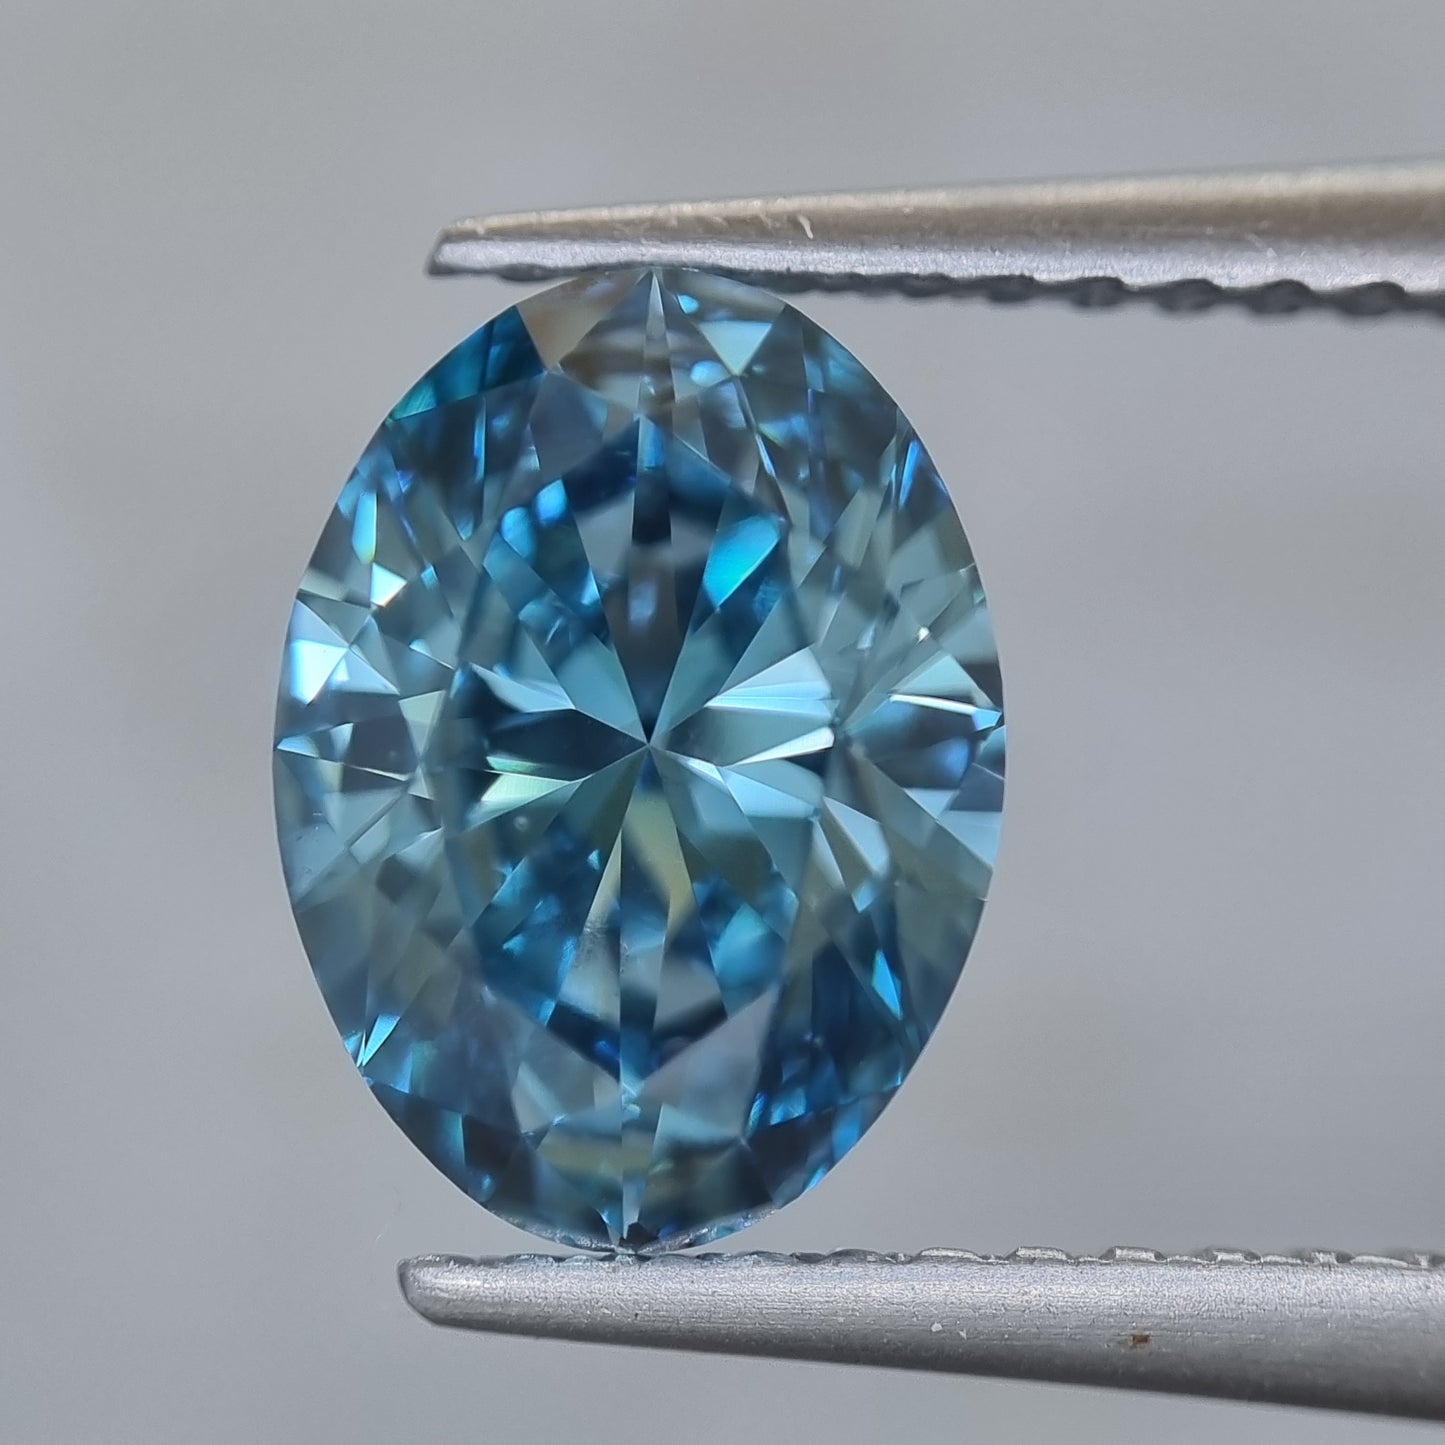 Fancy Intense Greenish Blue Oval Cut Lab Grown Diamond 1.79 Carat